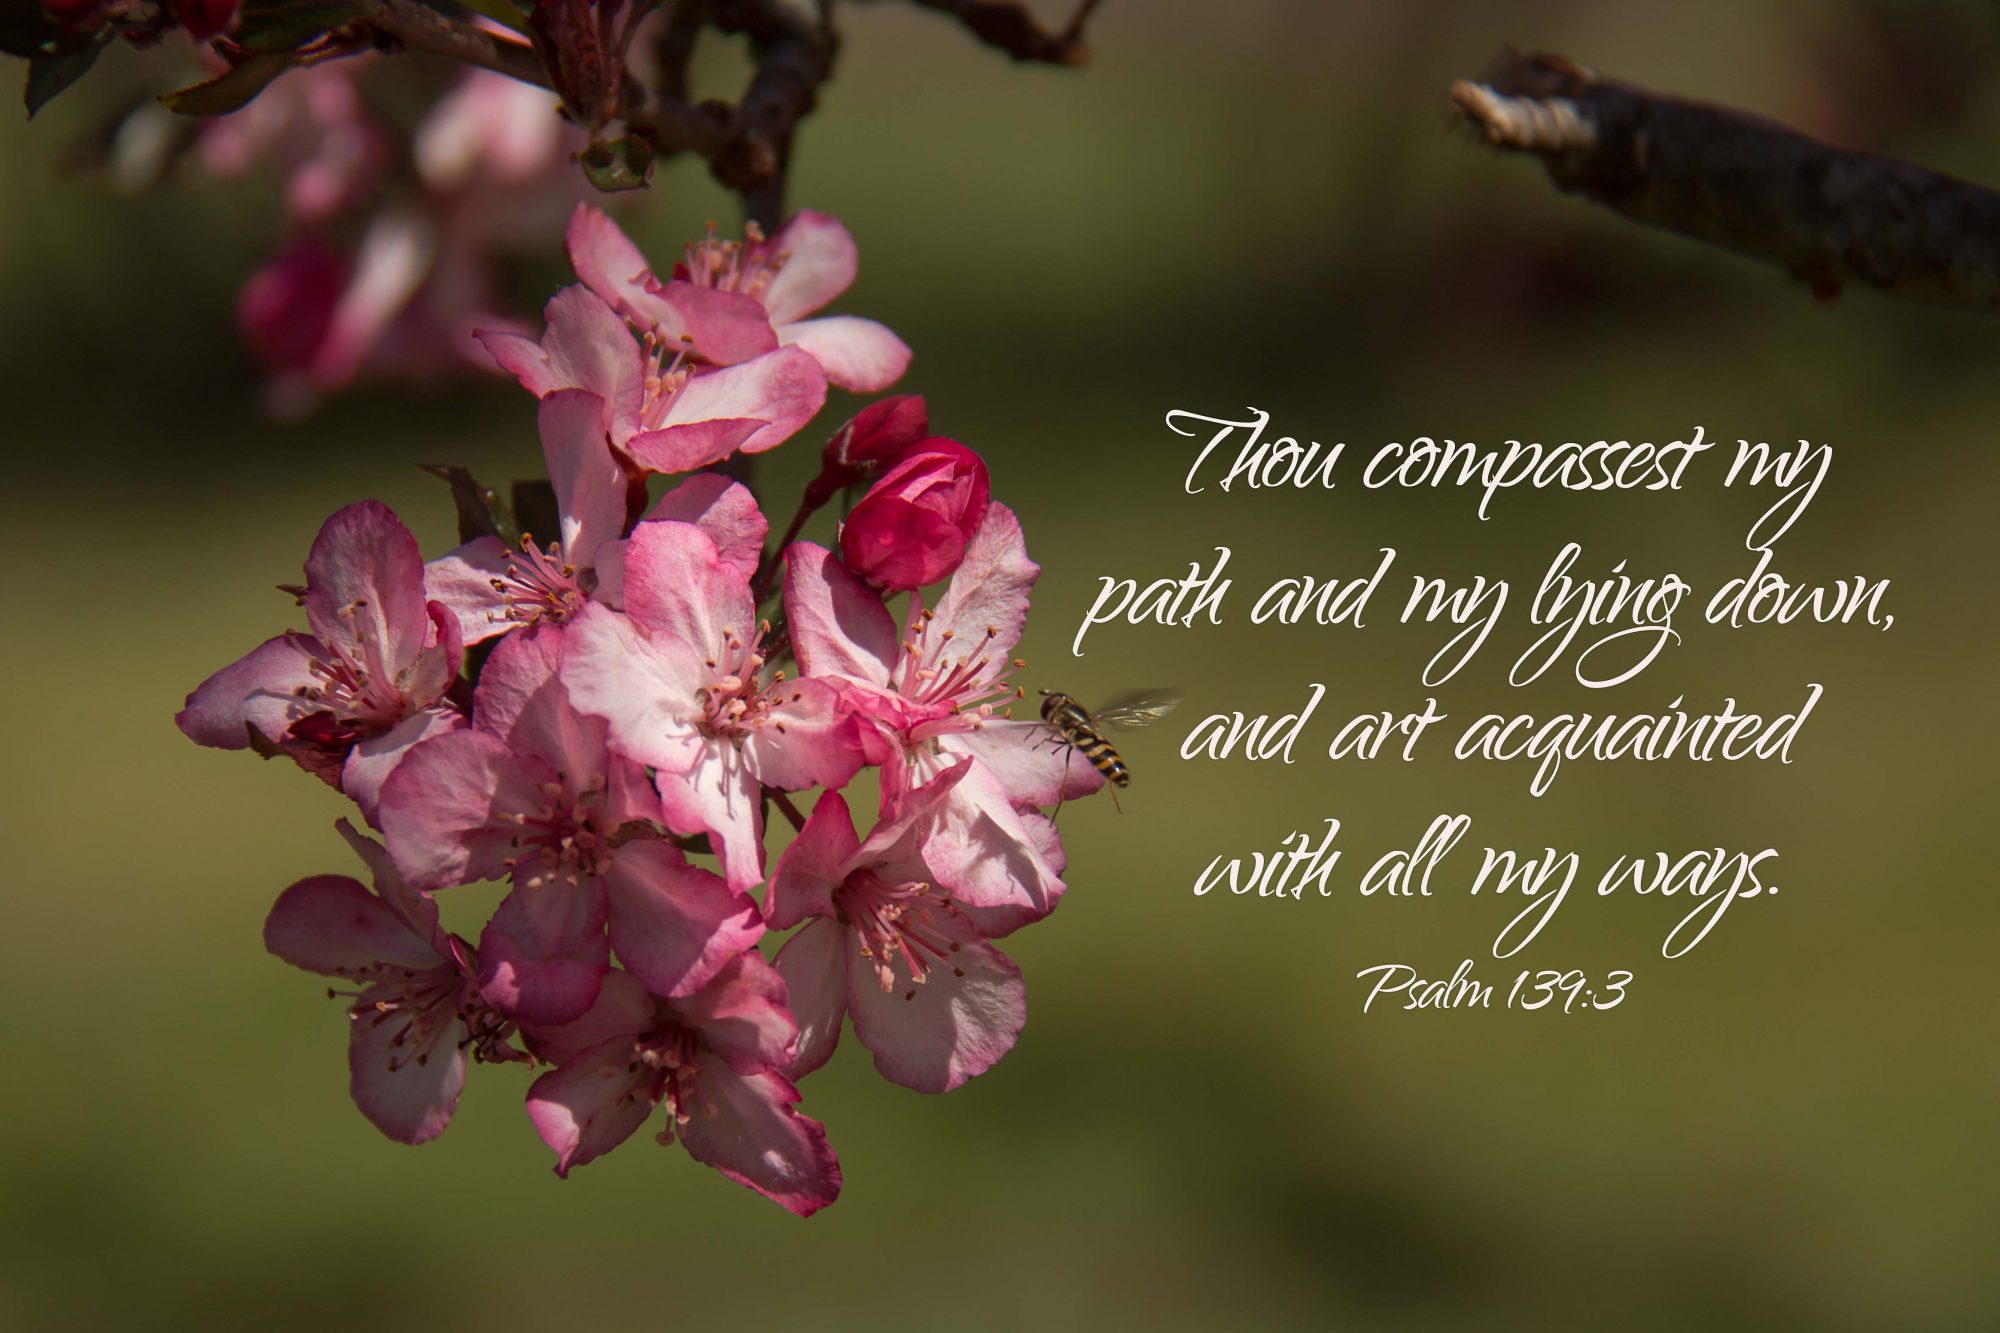 Psalm 139:3